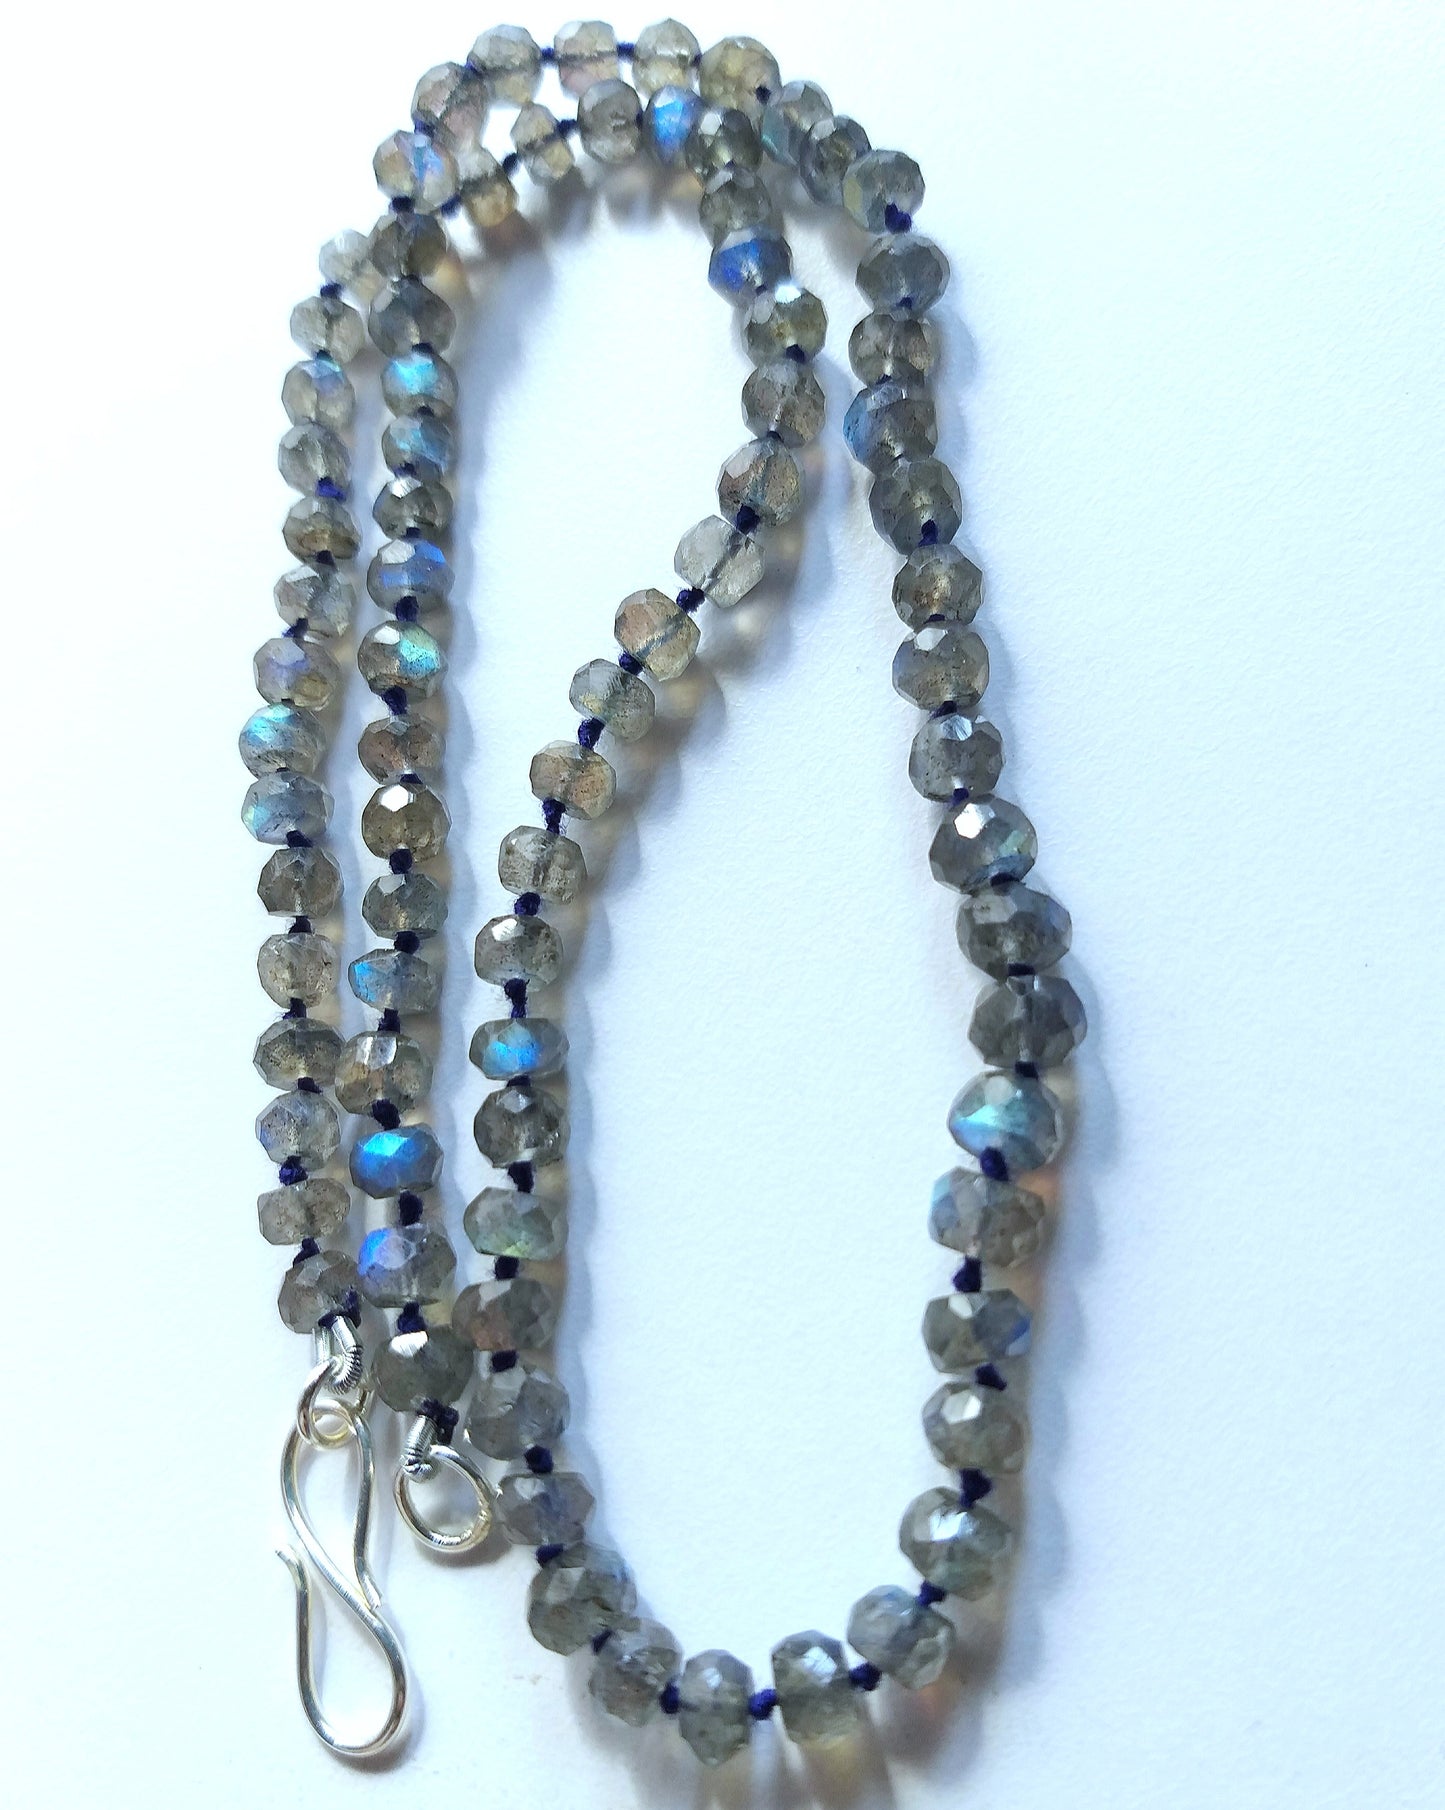 Natural Lapis Lazuli Pendant and Labradorite Beads Necklace